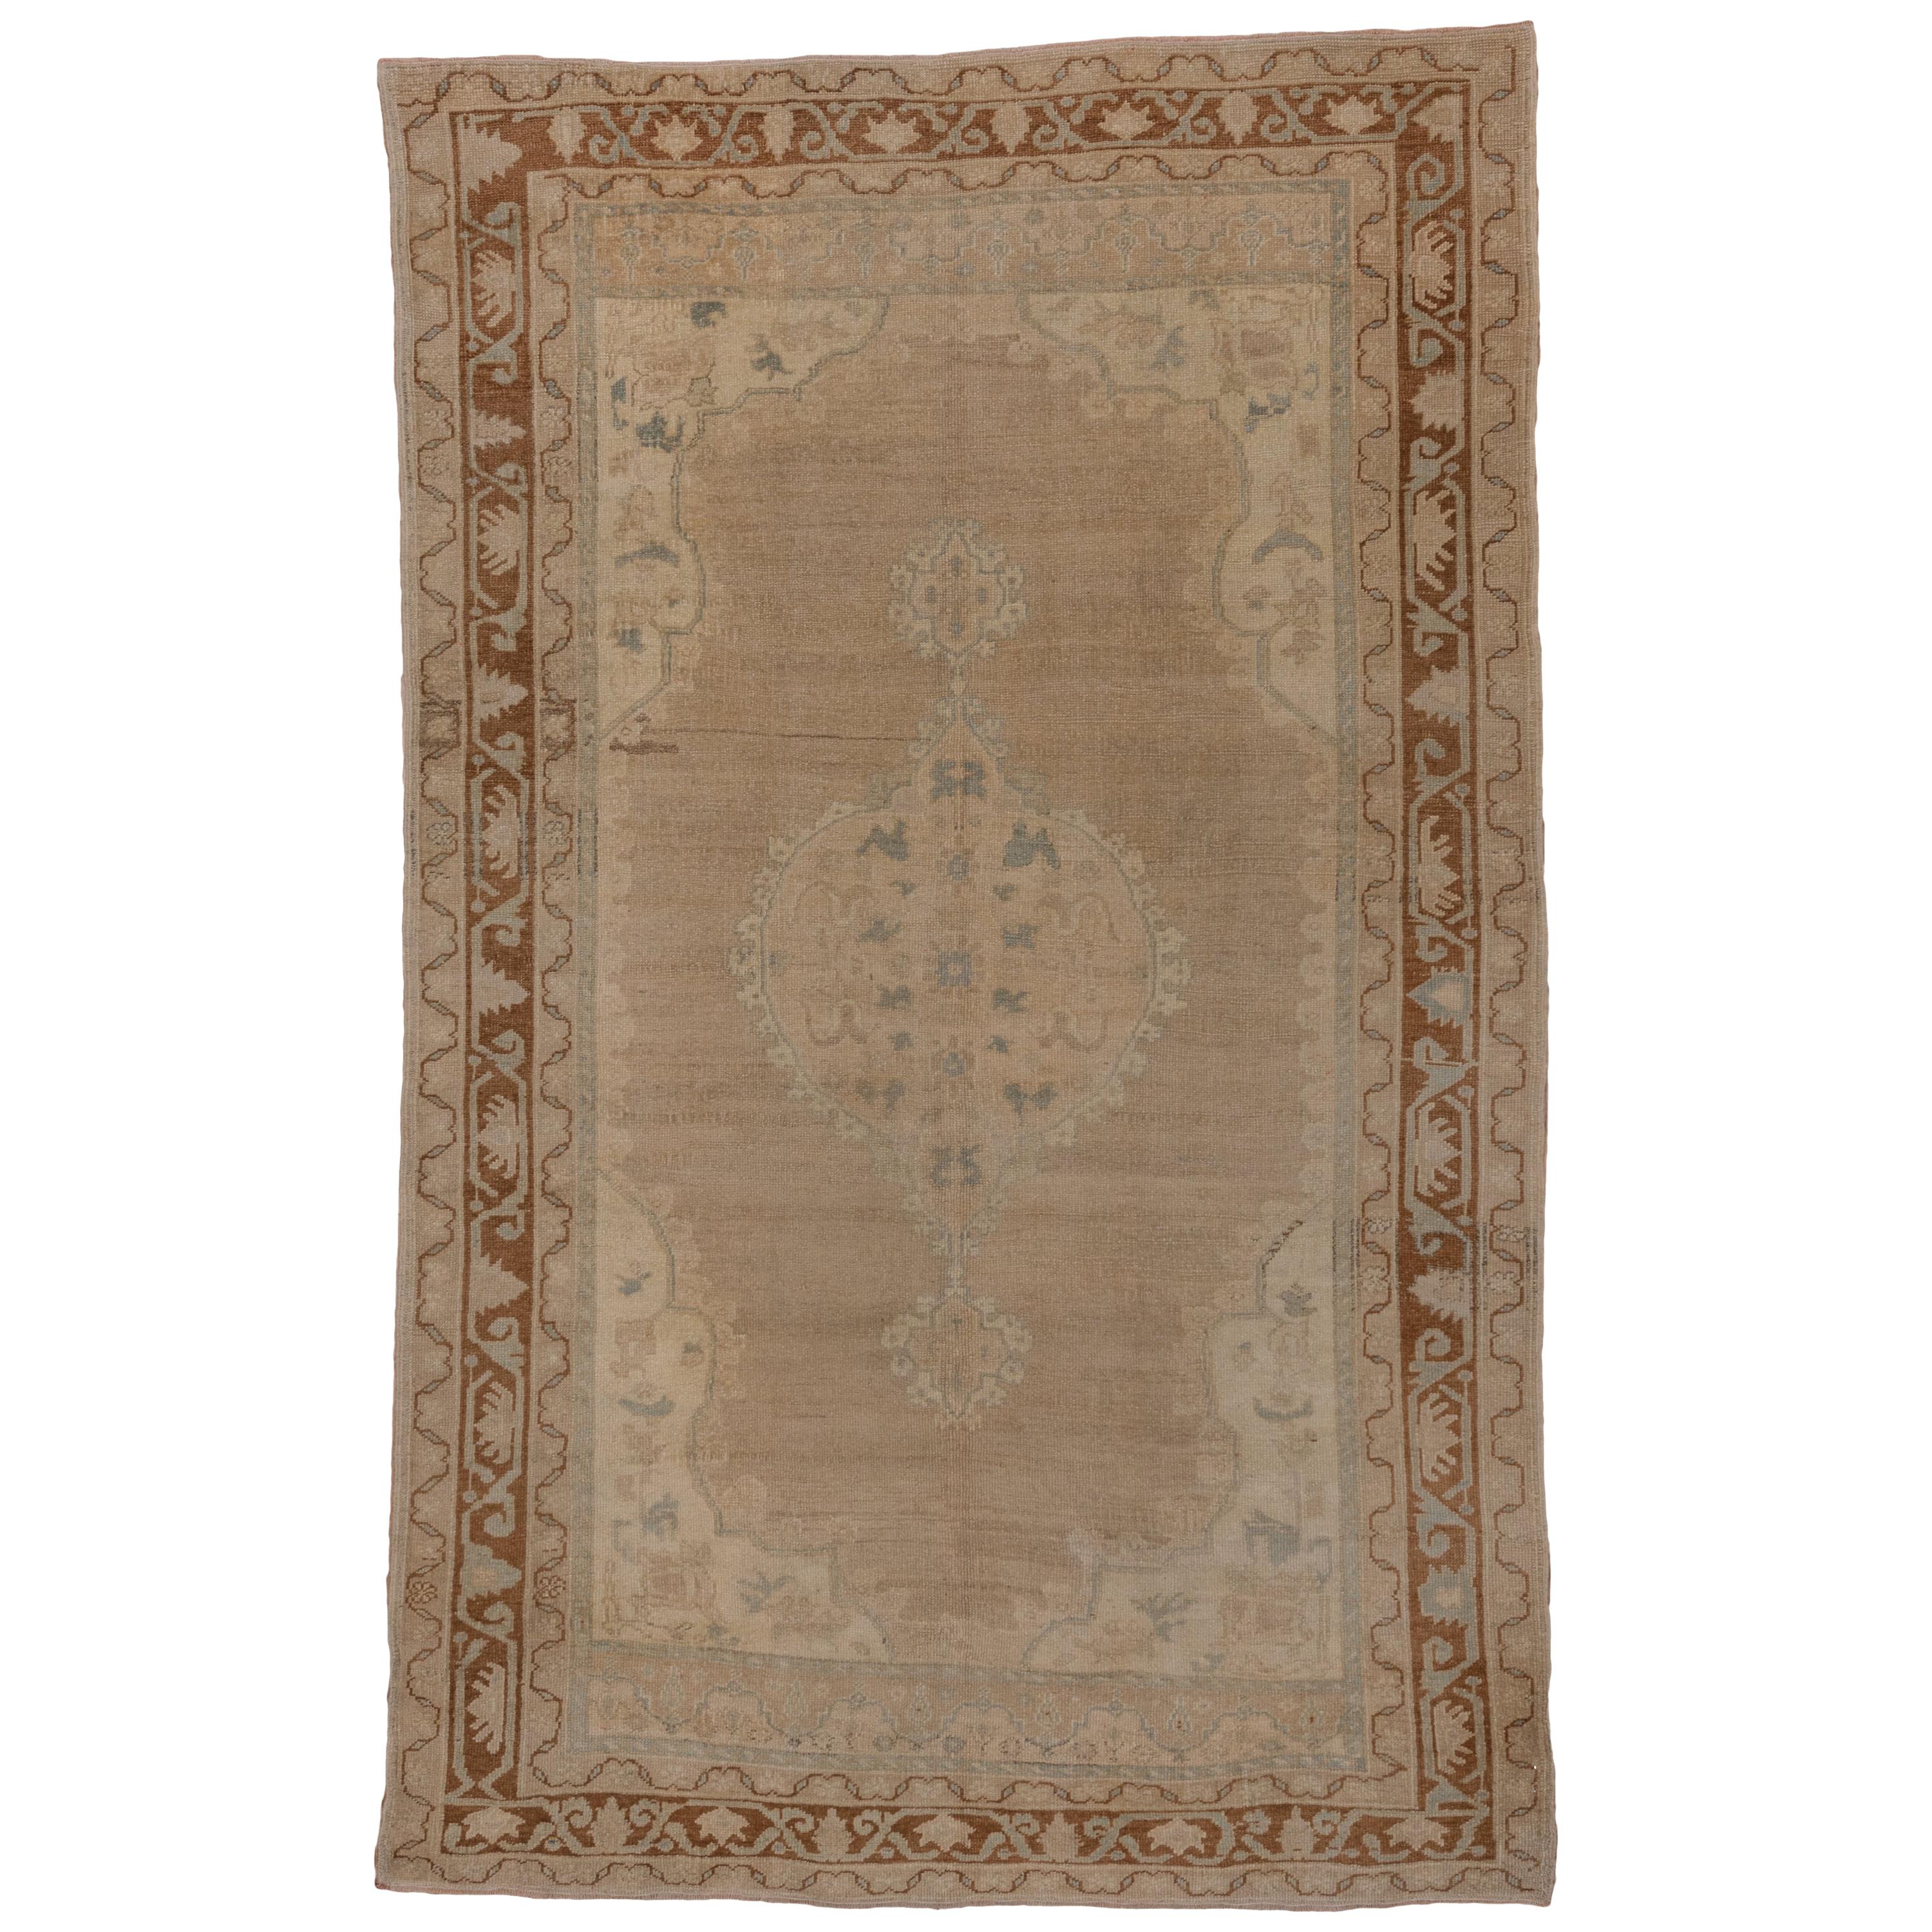 Antique Oushak Carpet, circa 1920s